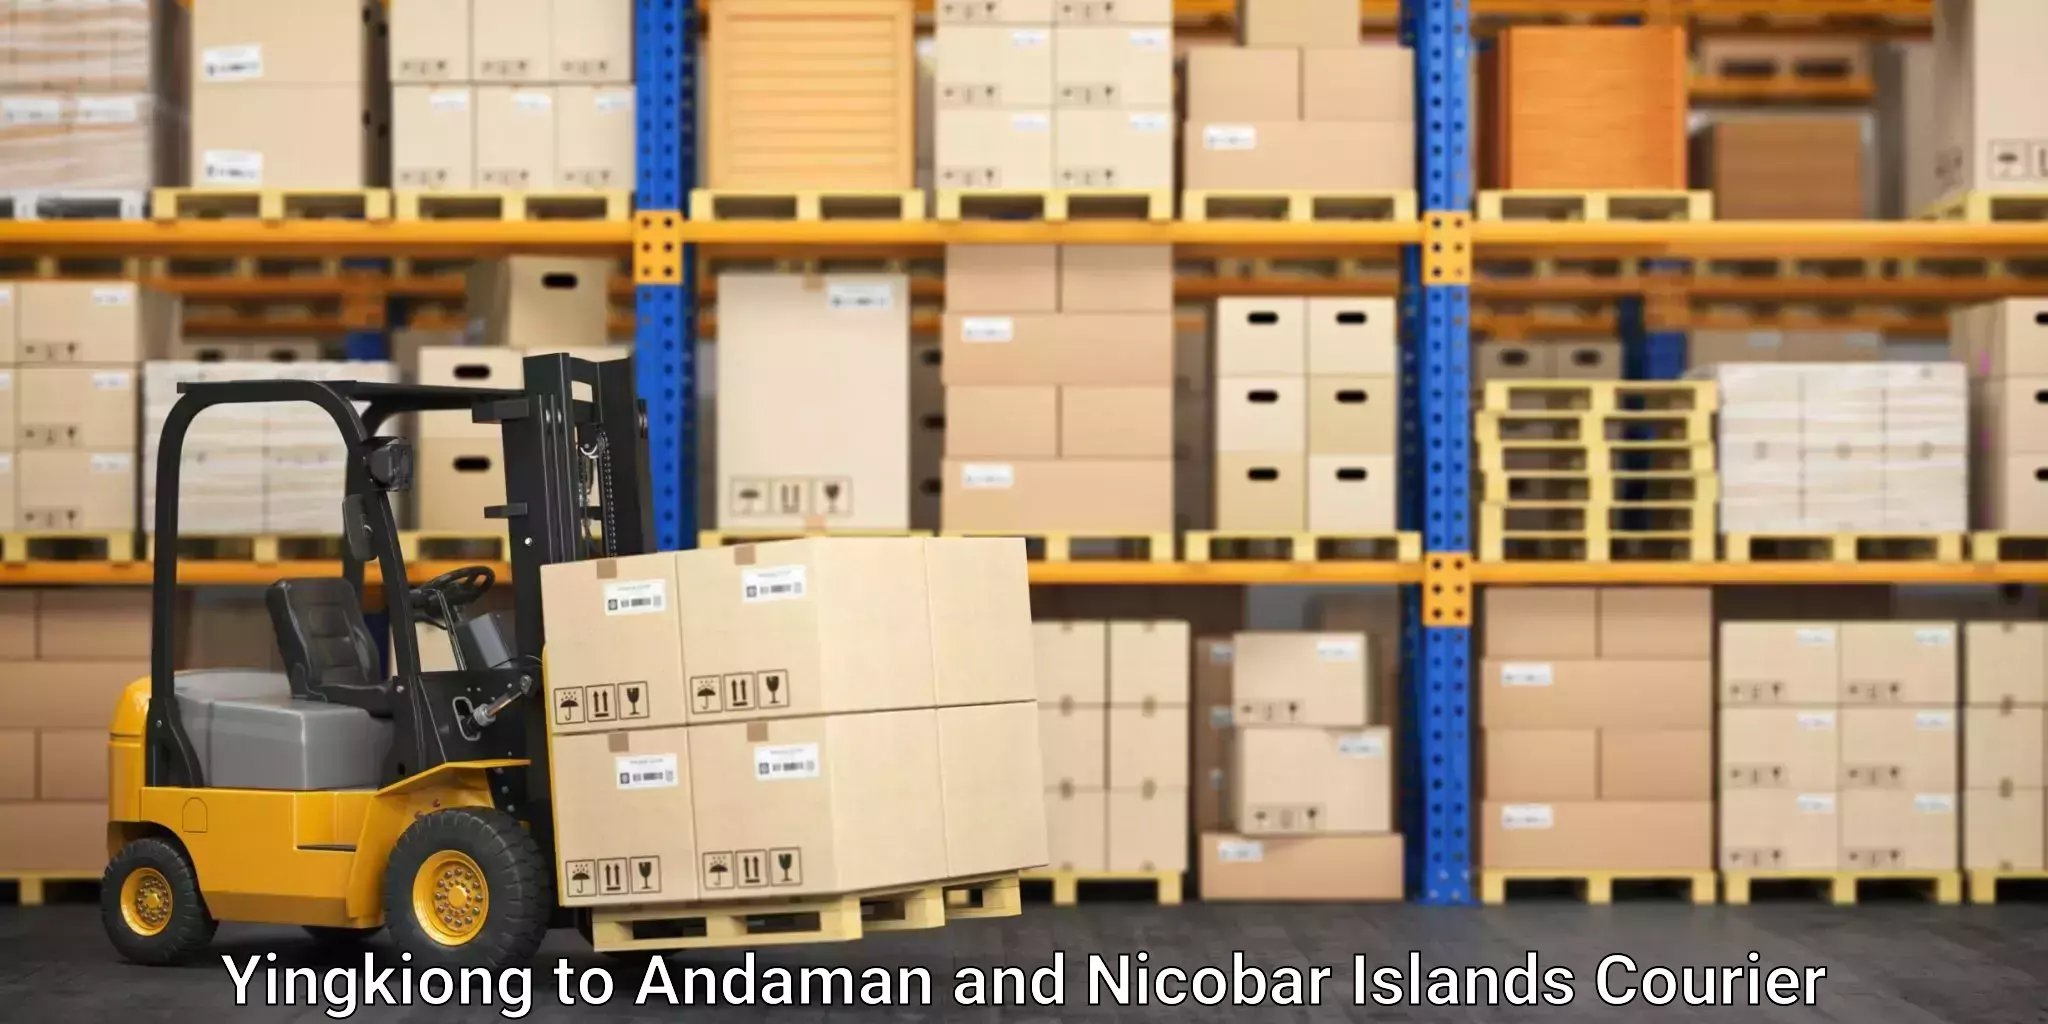 Global logistics network Yingkiong to Andaman and Nicobar Islands